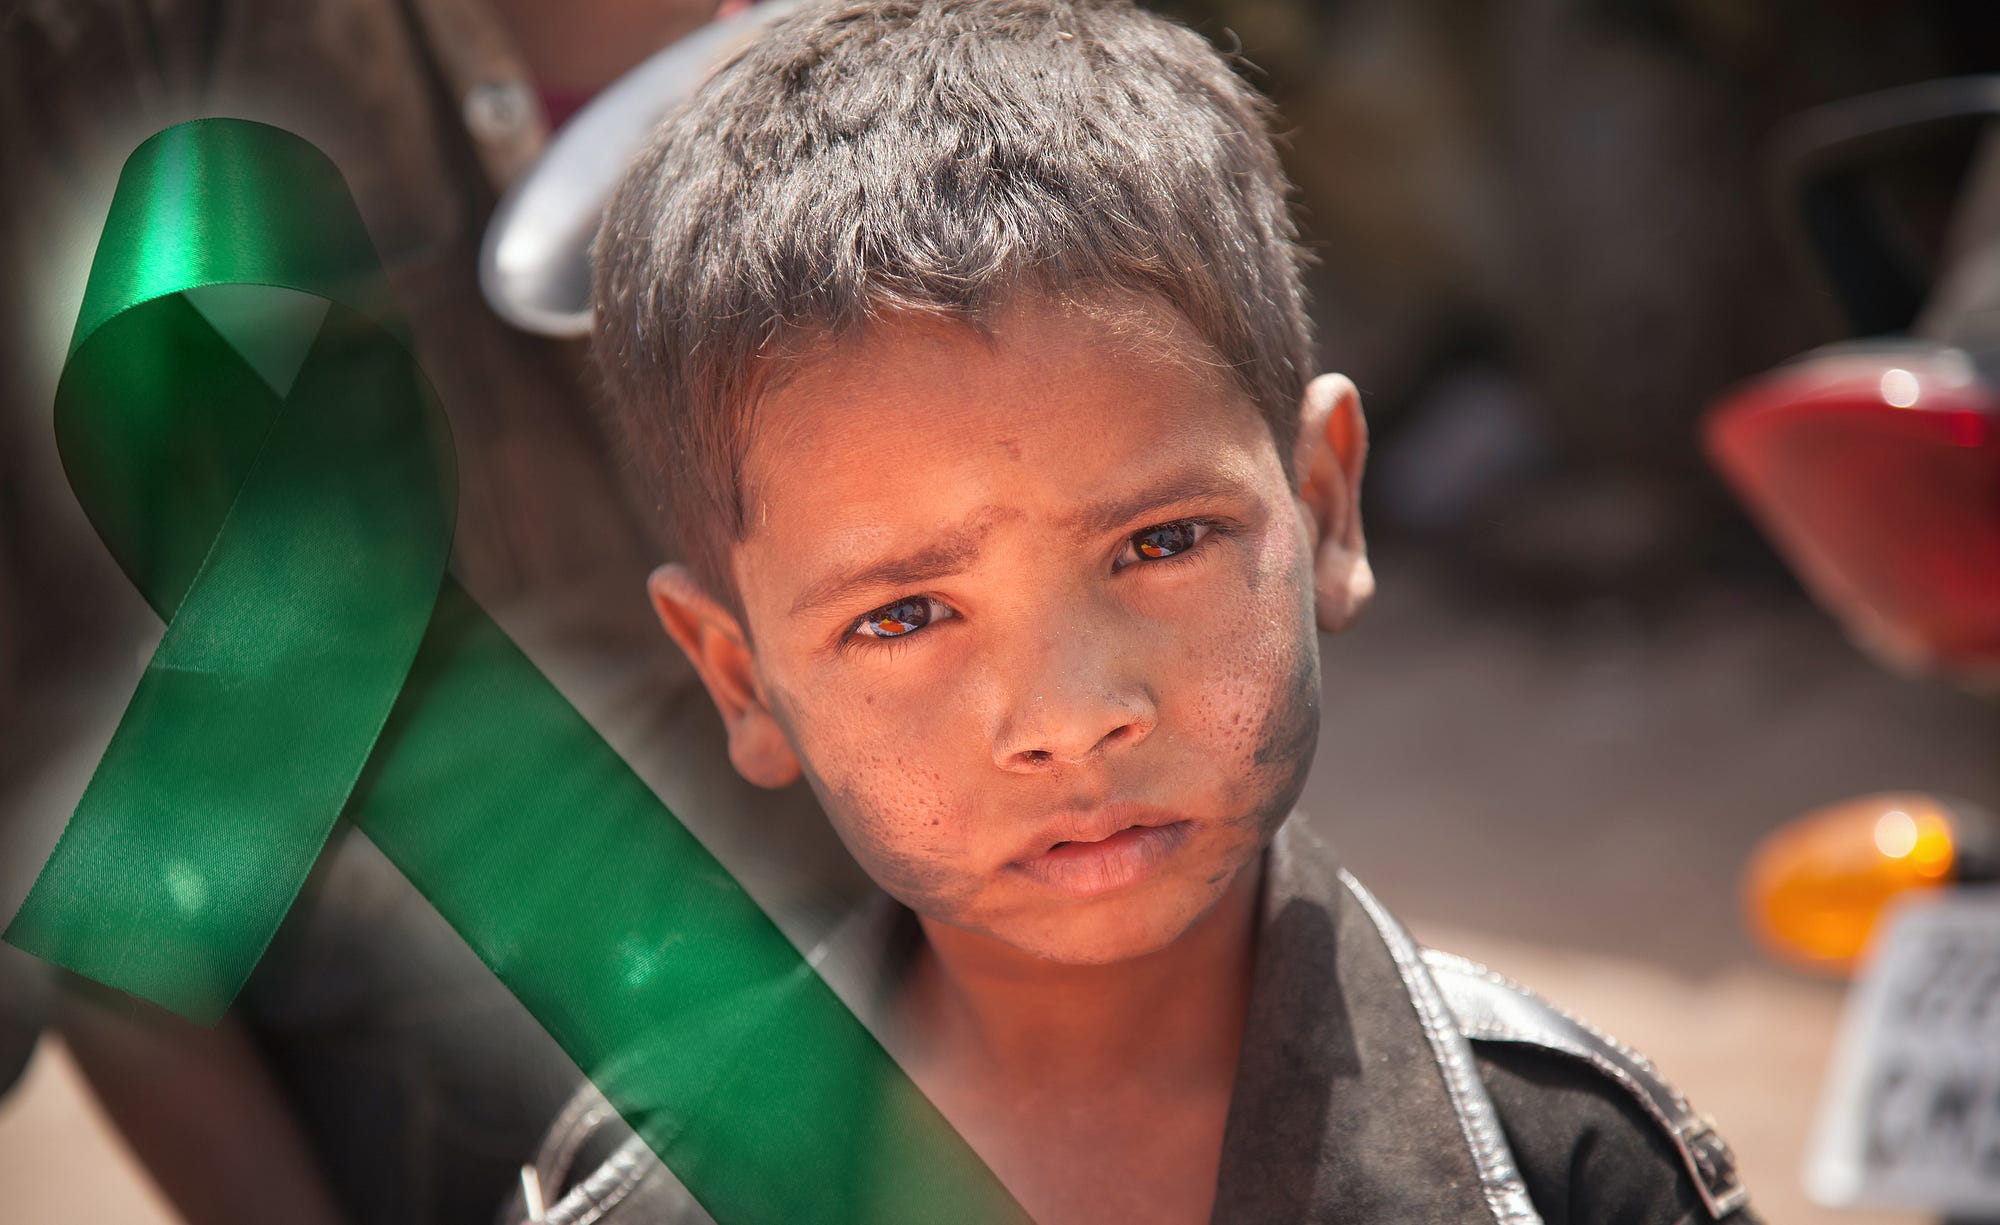 Street boy (India) alongside a green ribbon, symbol of mental health awareness. Photo 23755205 / © Ziprashantzi | Dreamstime.com